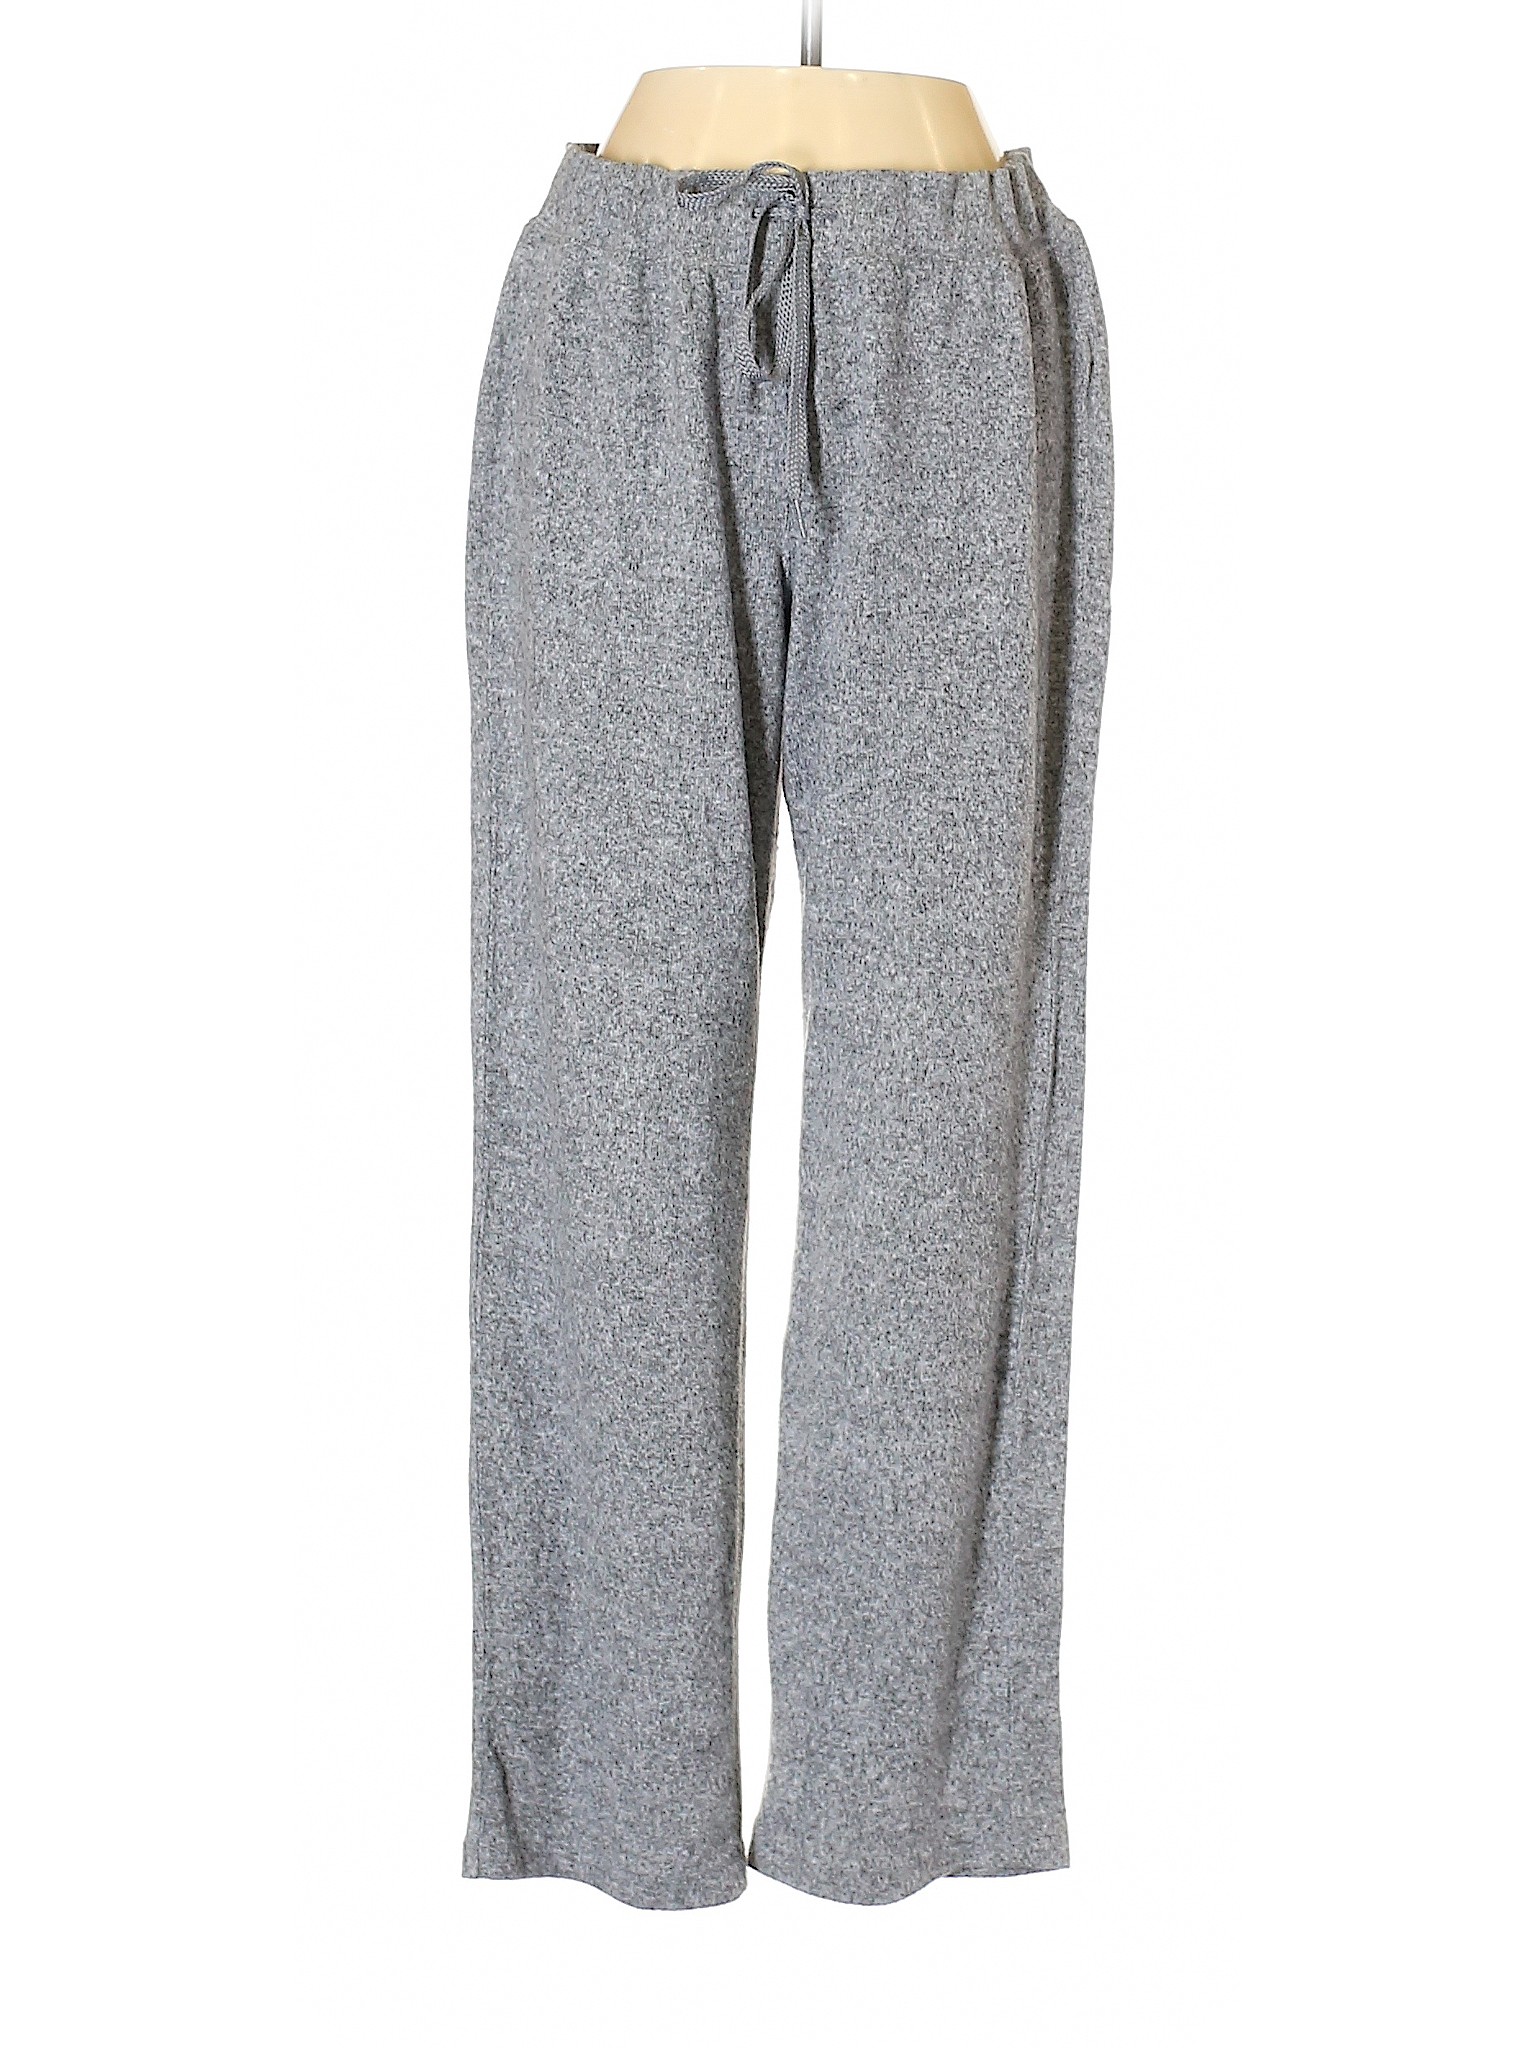 Green Tea Gray Casual Pants Size M - 70% off | thredUP